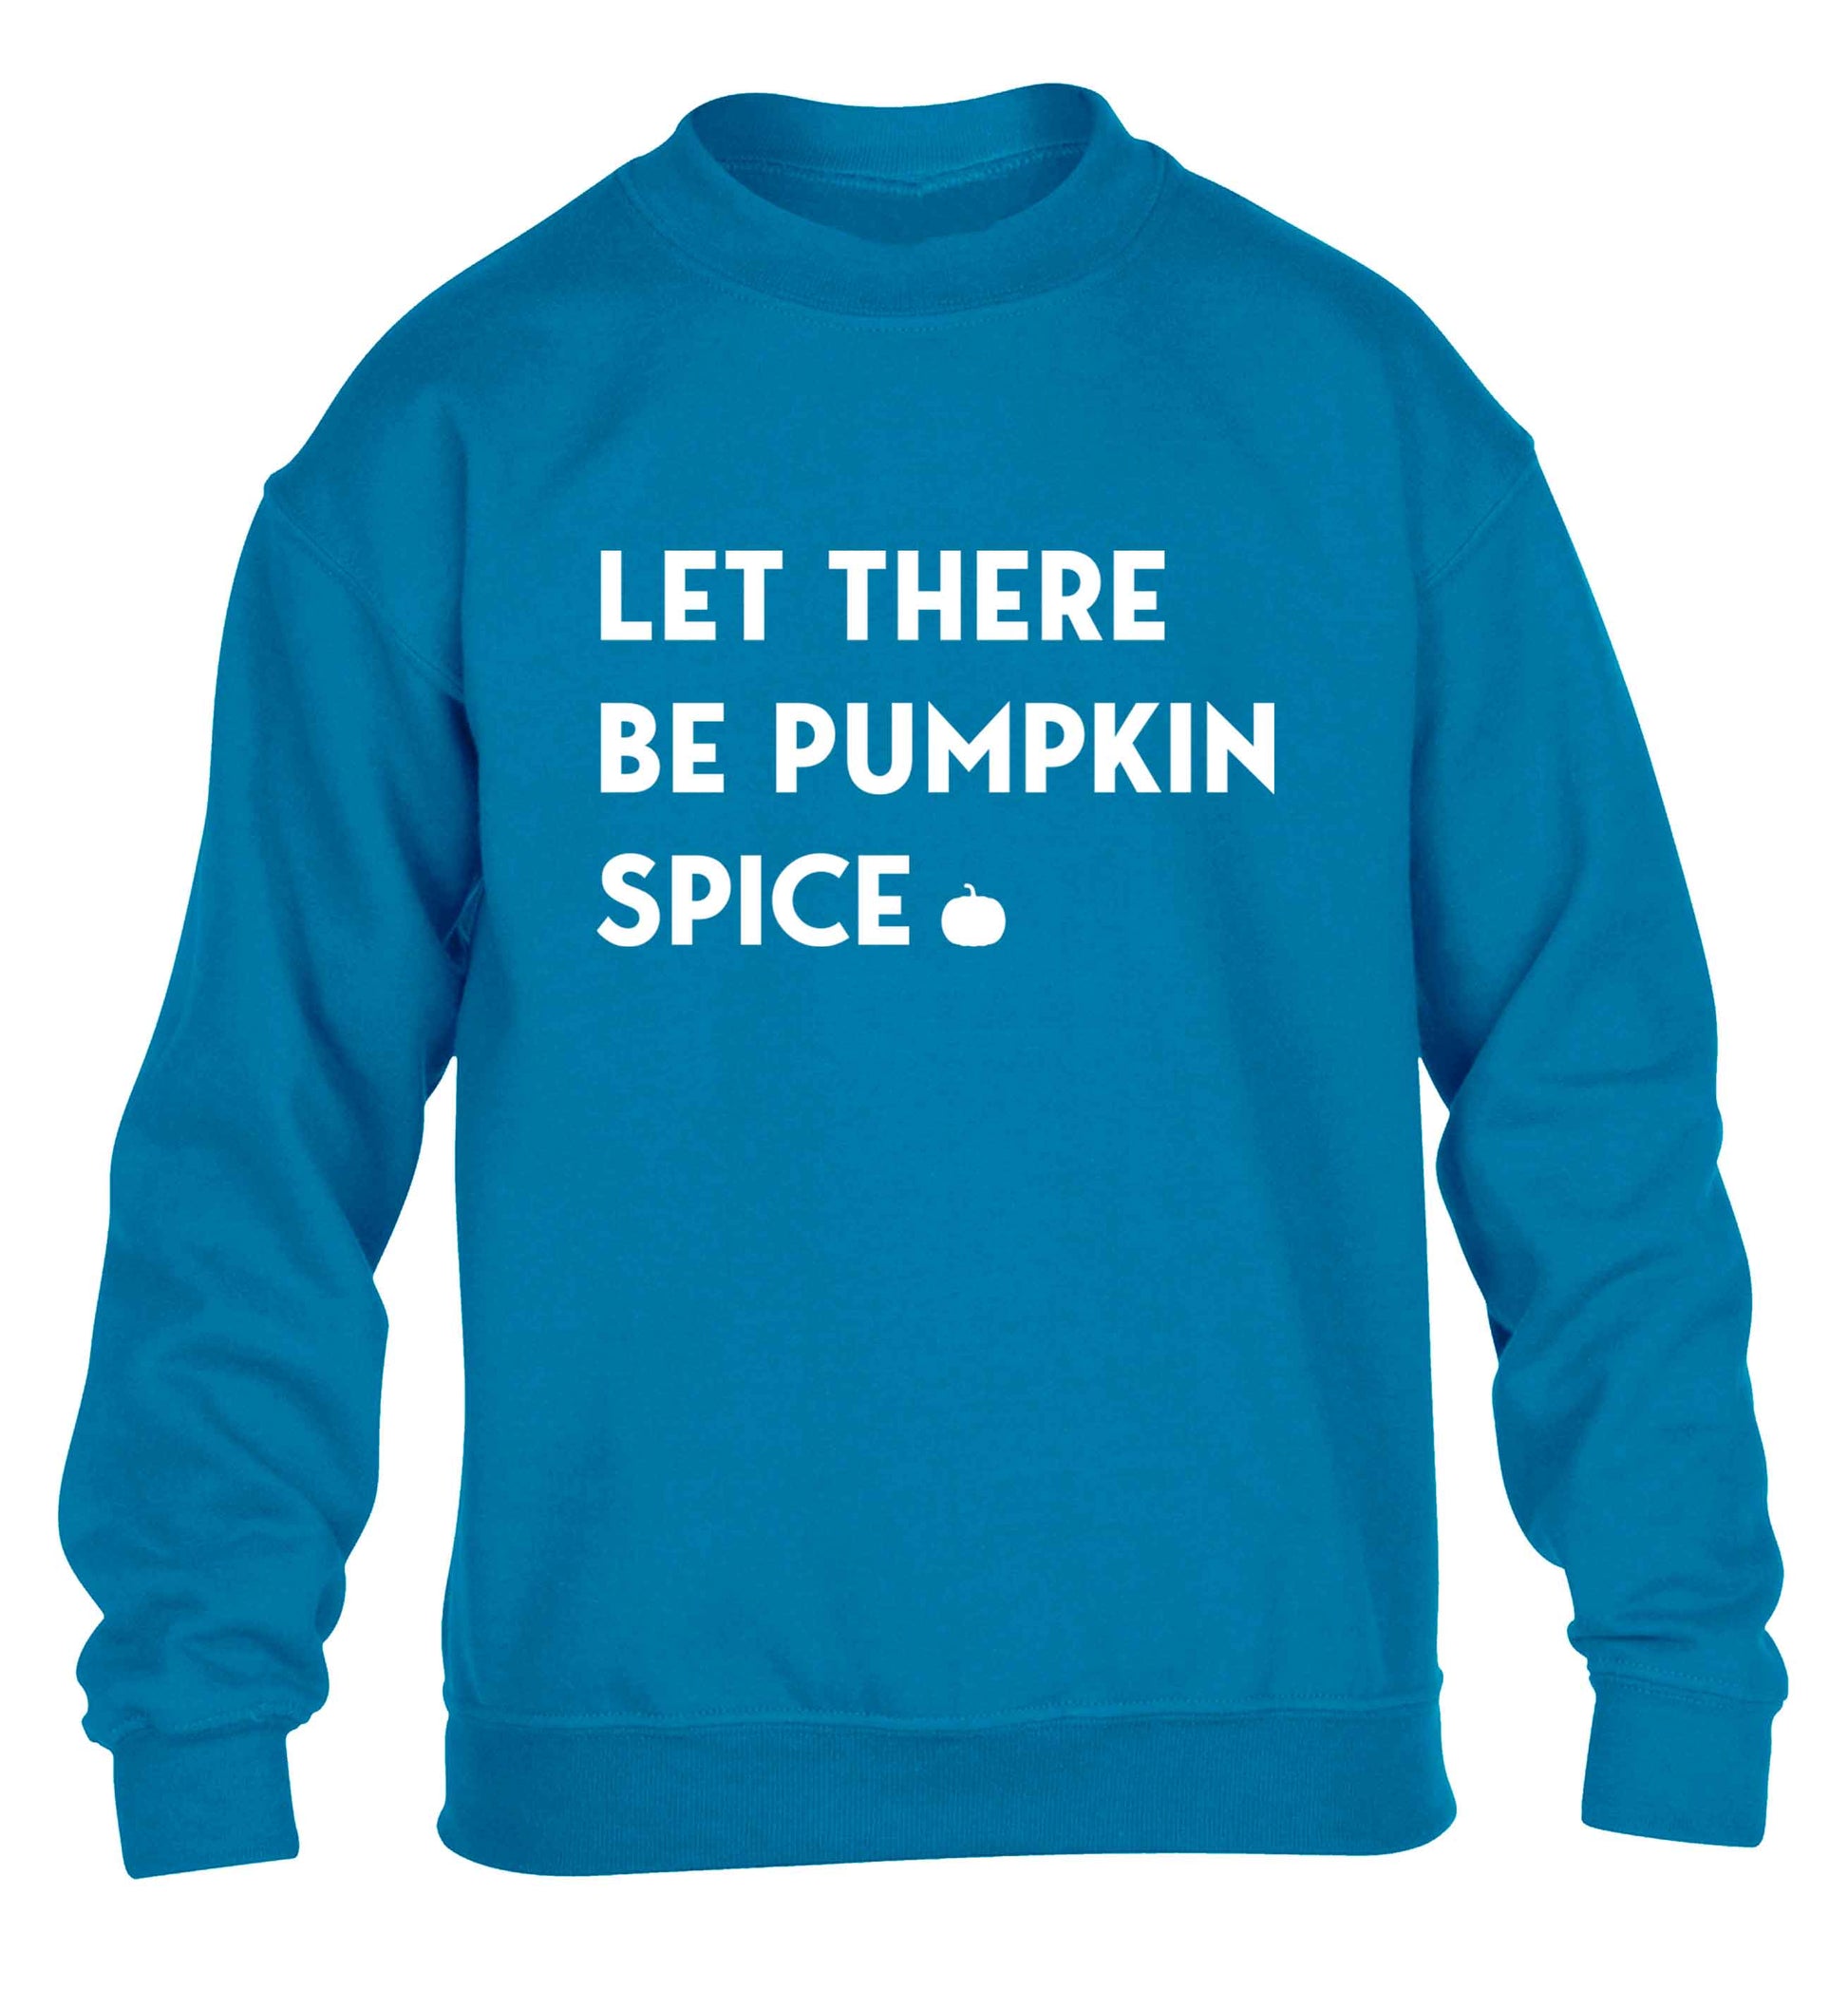 Let Be Pumpkin Spice children's blue sweater 12-13 Years